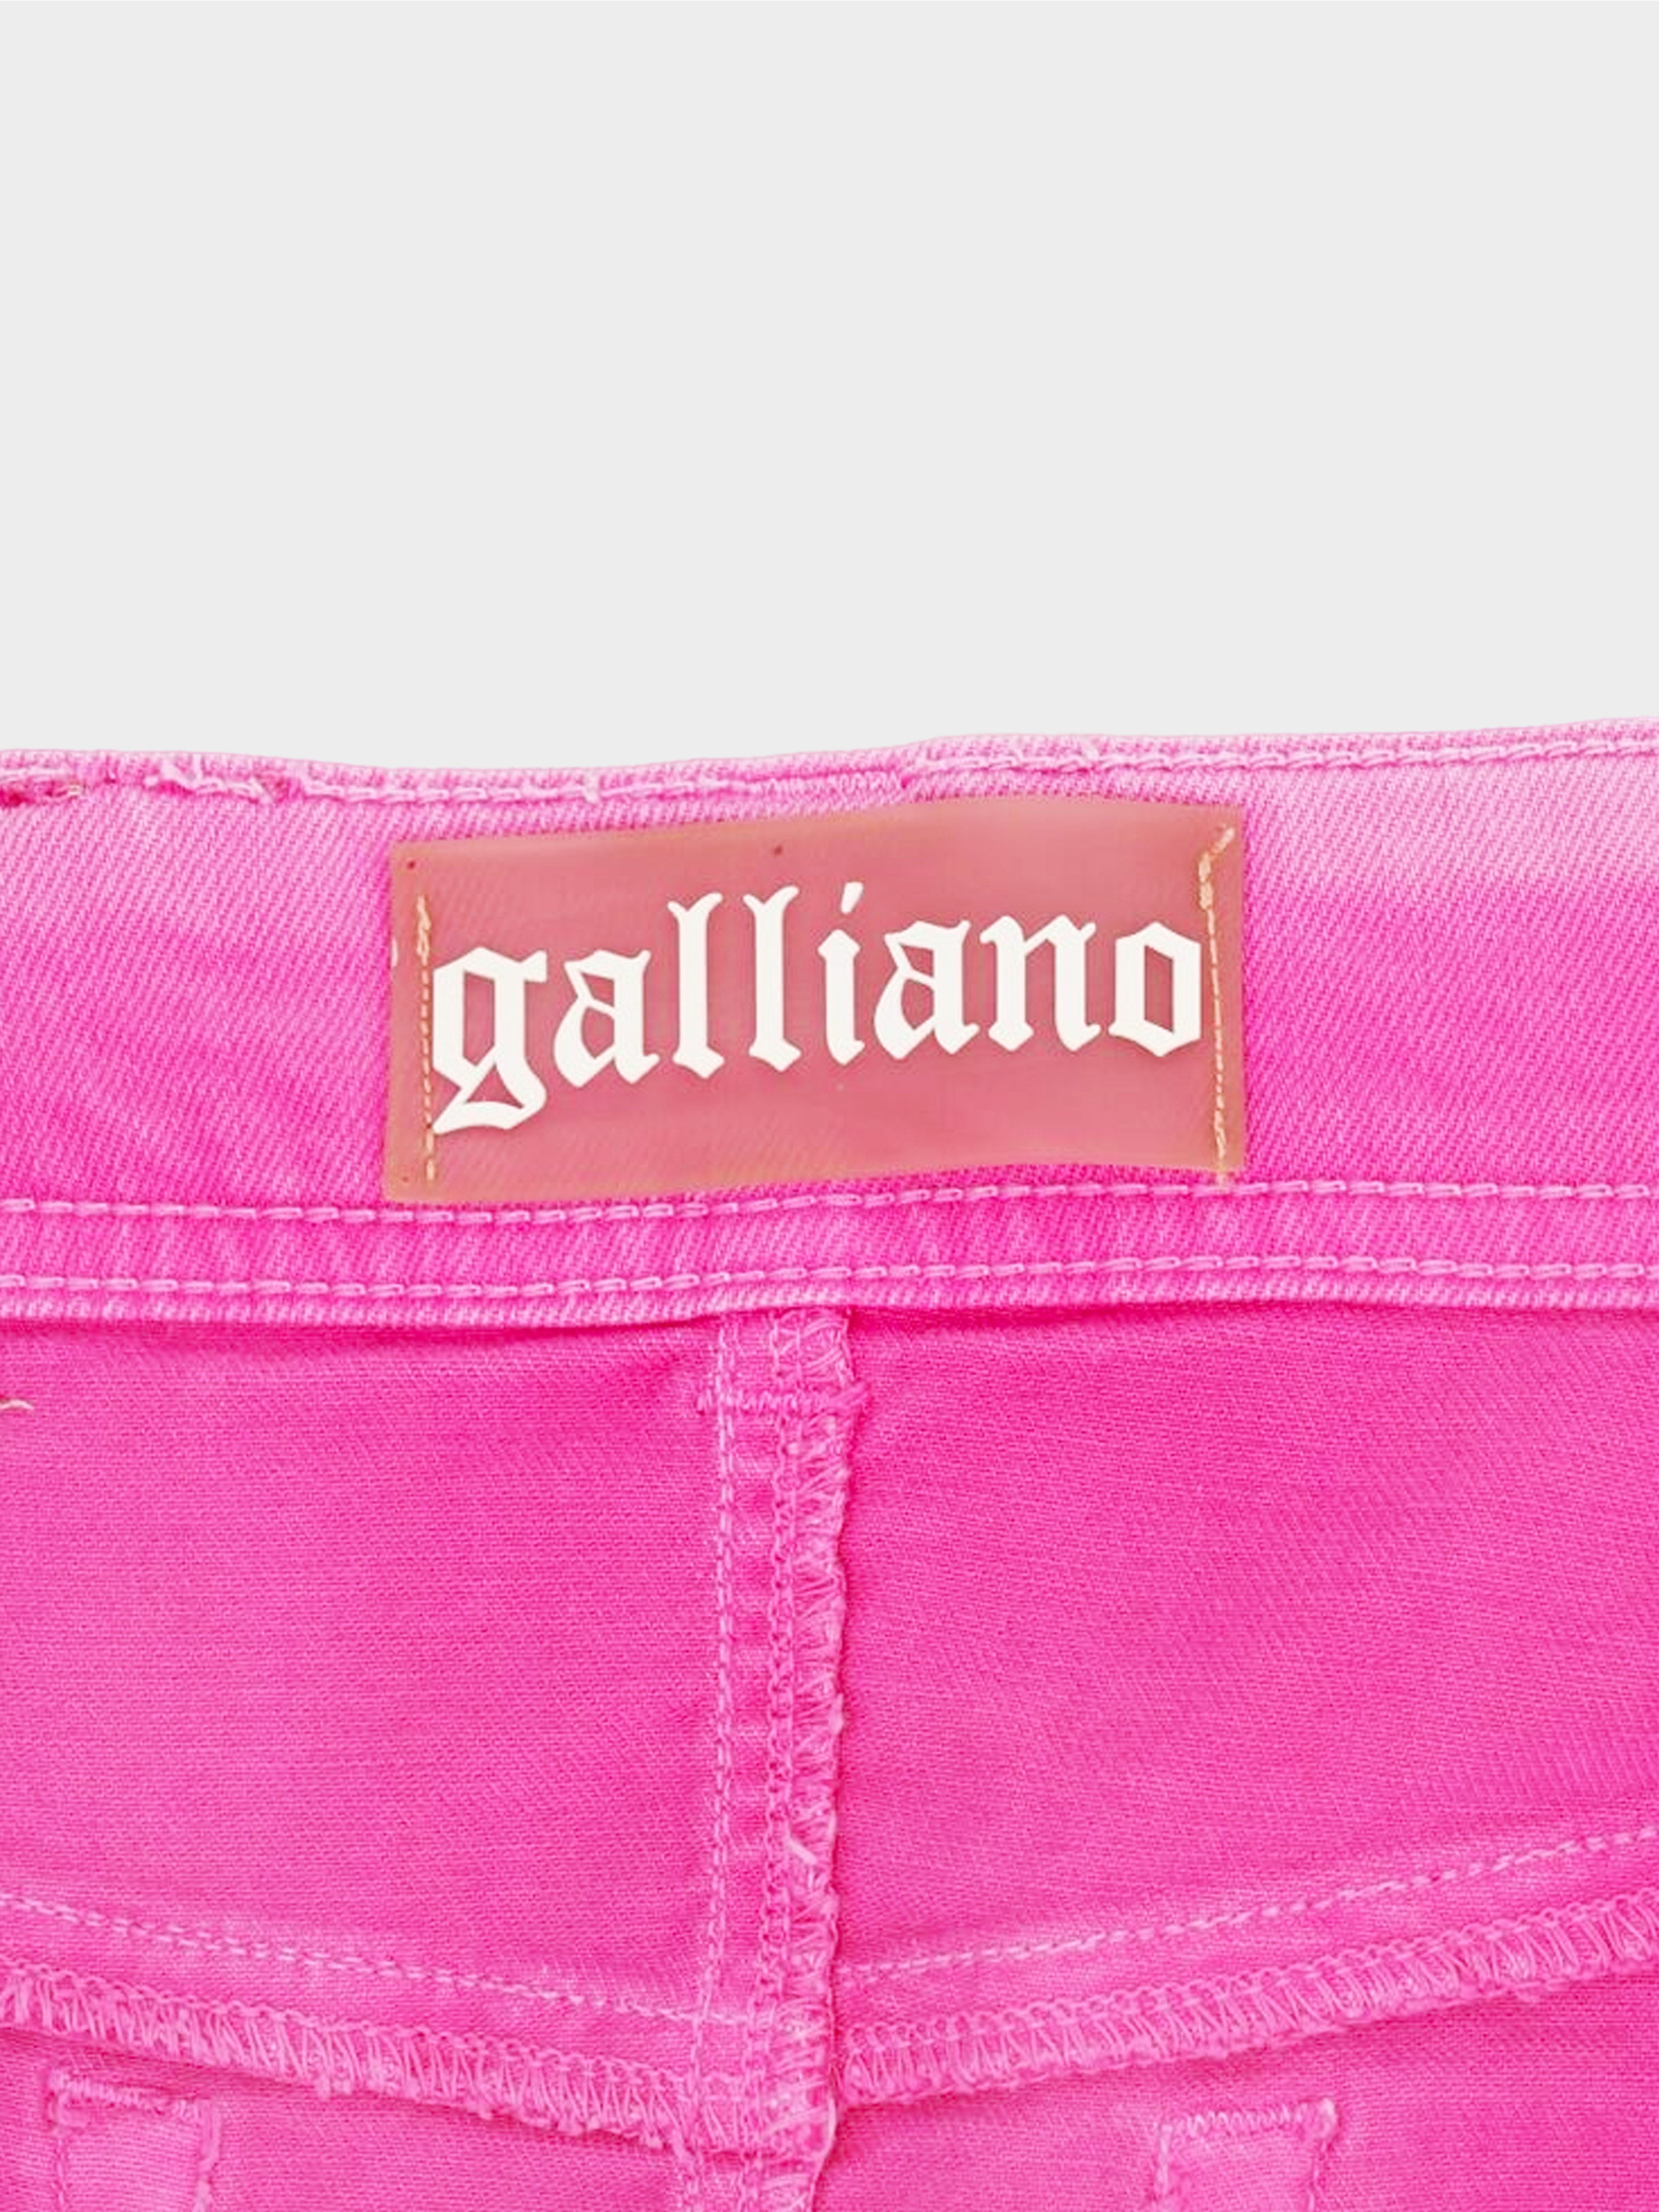 John Galliano 2000s Washed Pink Denim Mini Skirt